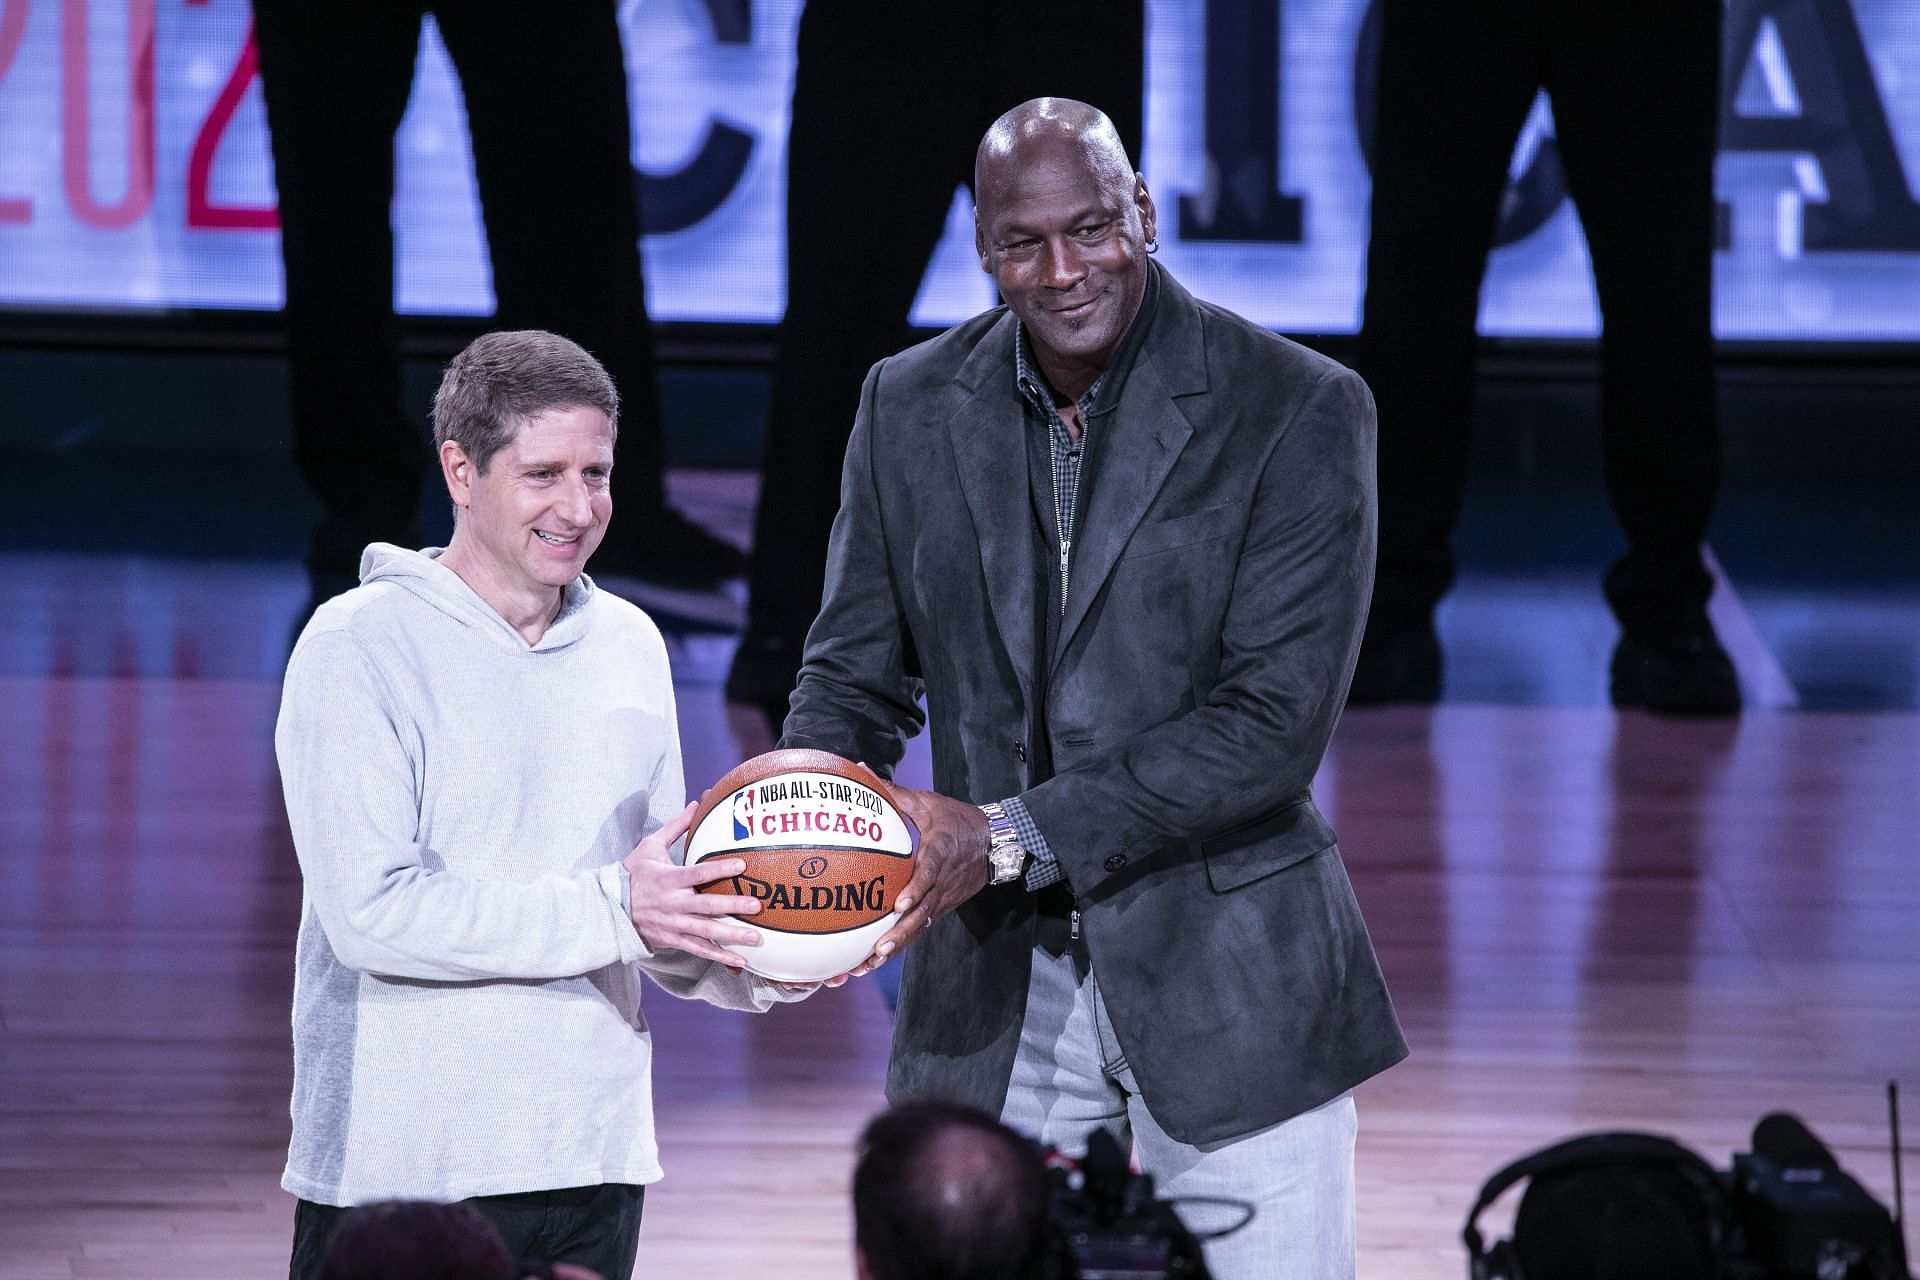 Michael Jordan, right, won six championships in his impressive NBA career. (Image via Getty Images)